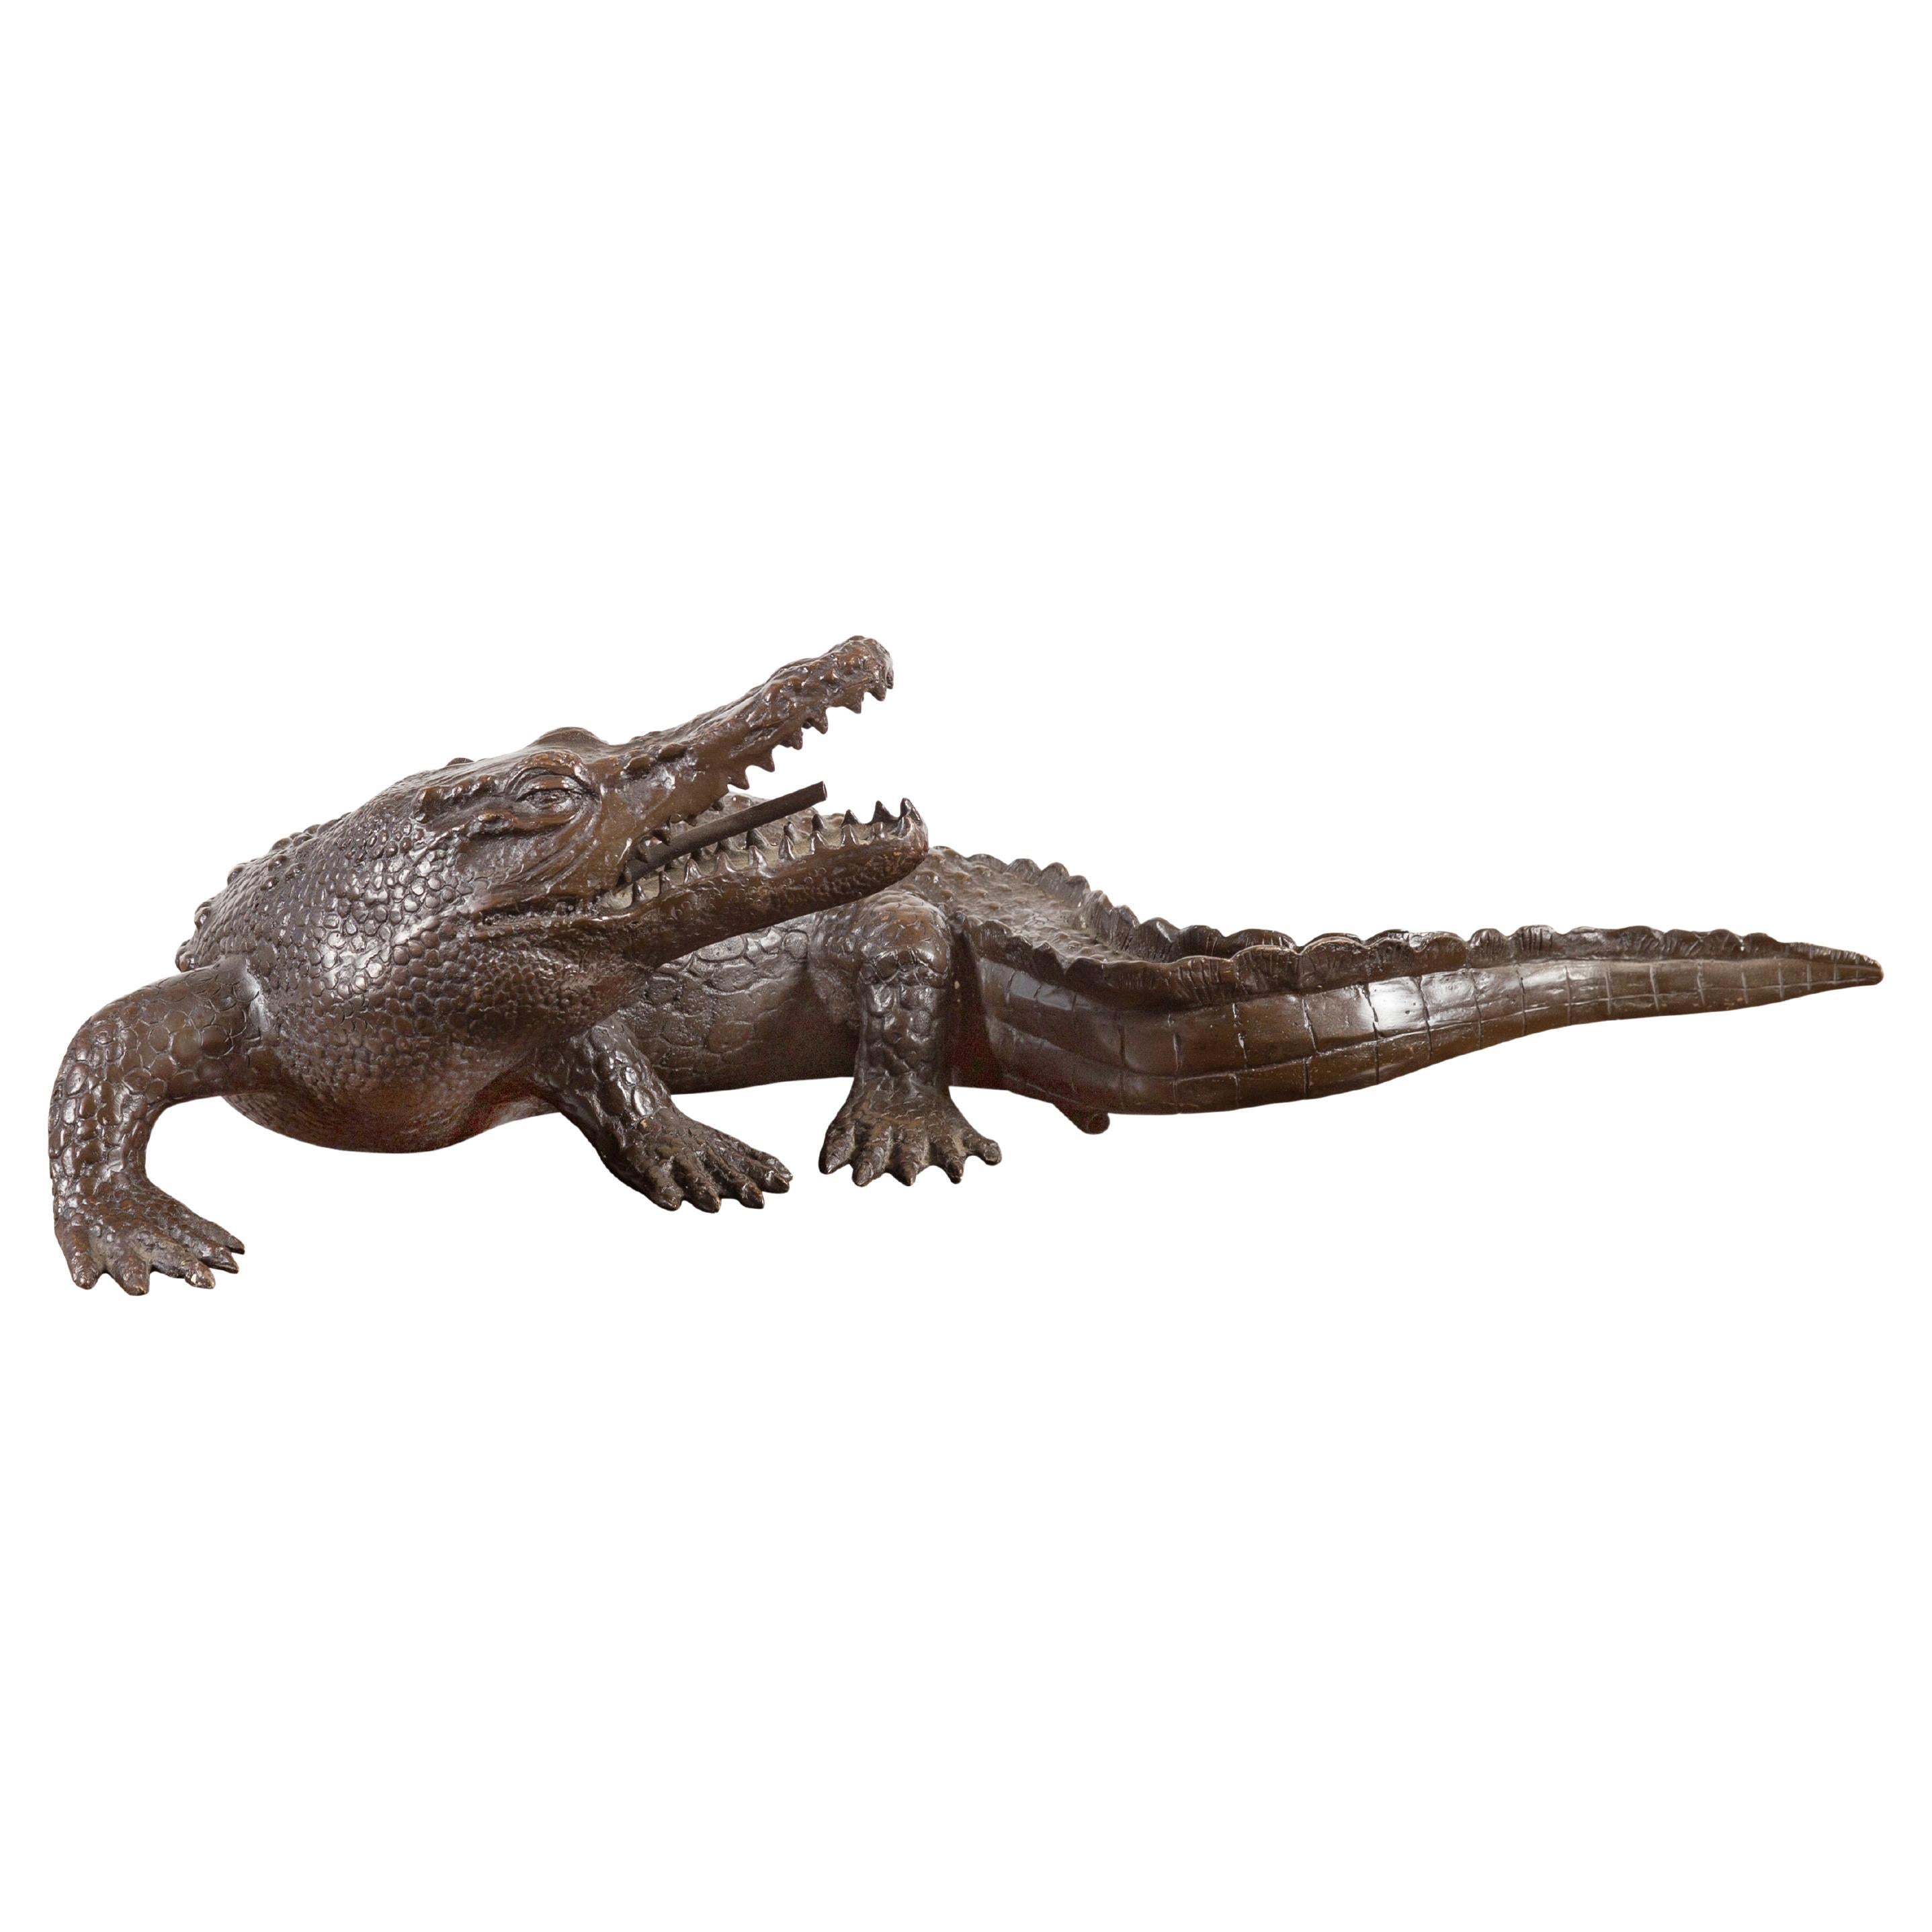 Contemporary Lost Wax Cast Bronze Alligator Sculpture with Textured Scutes